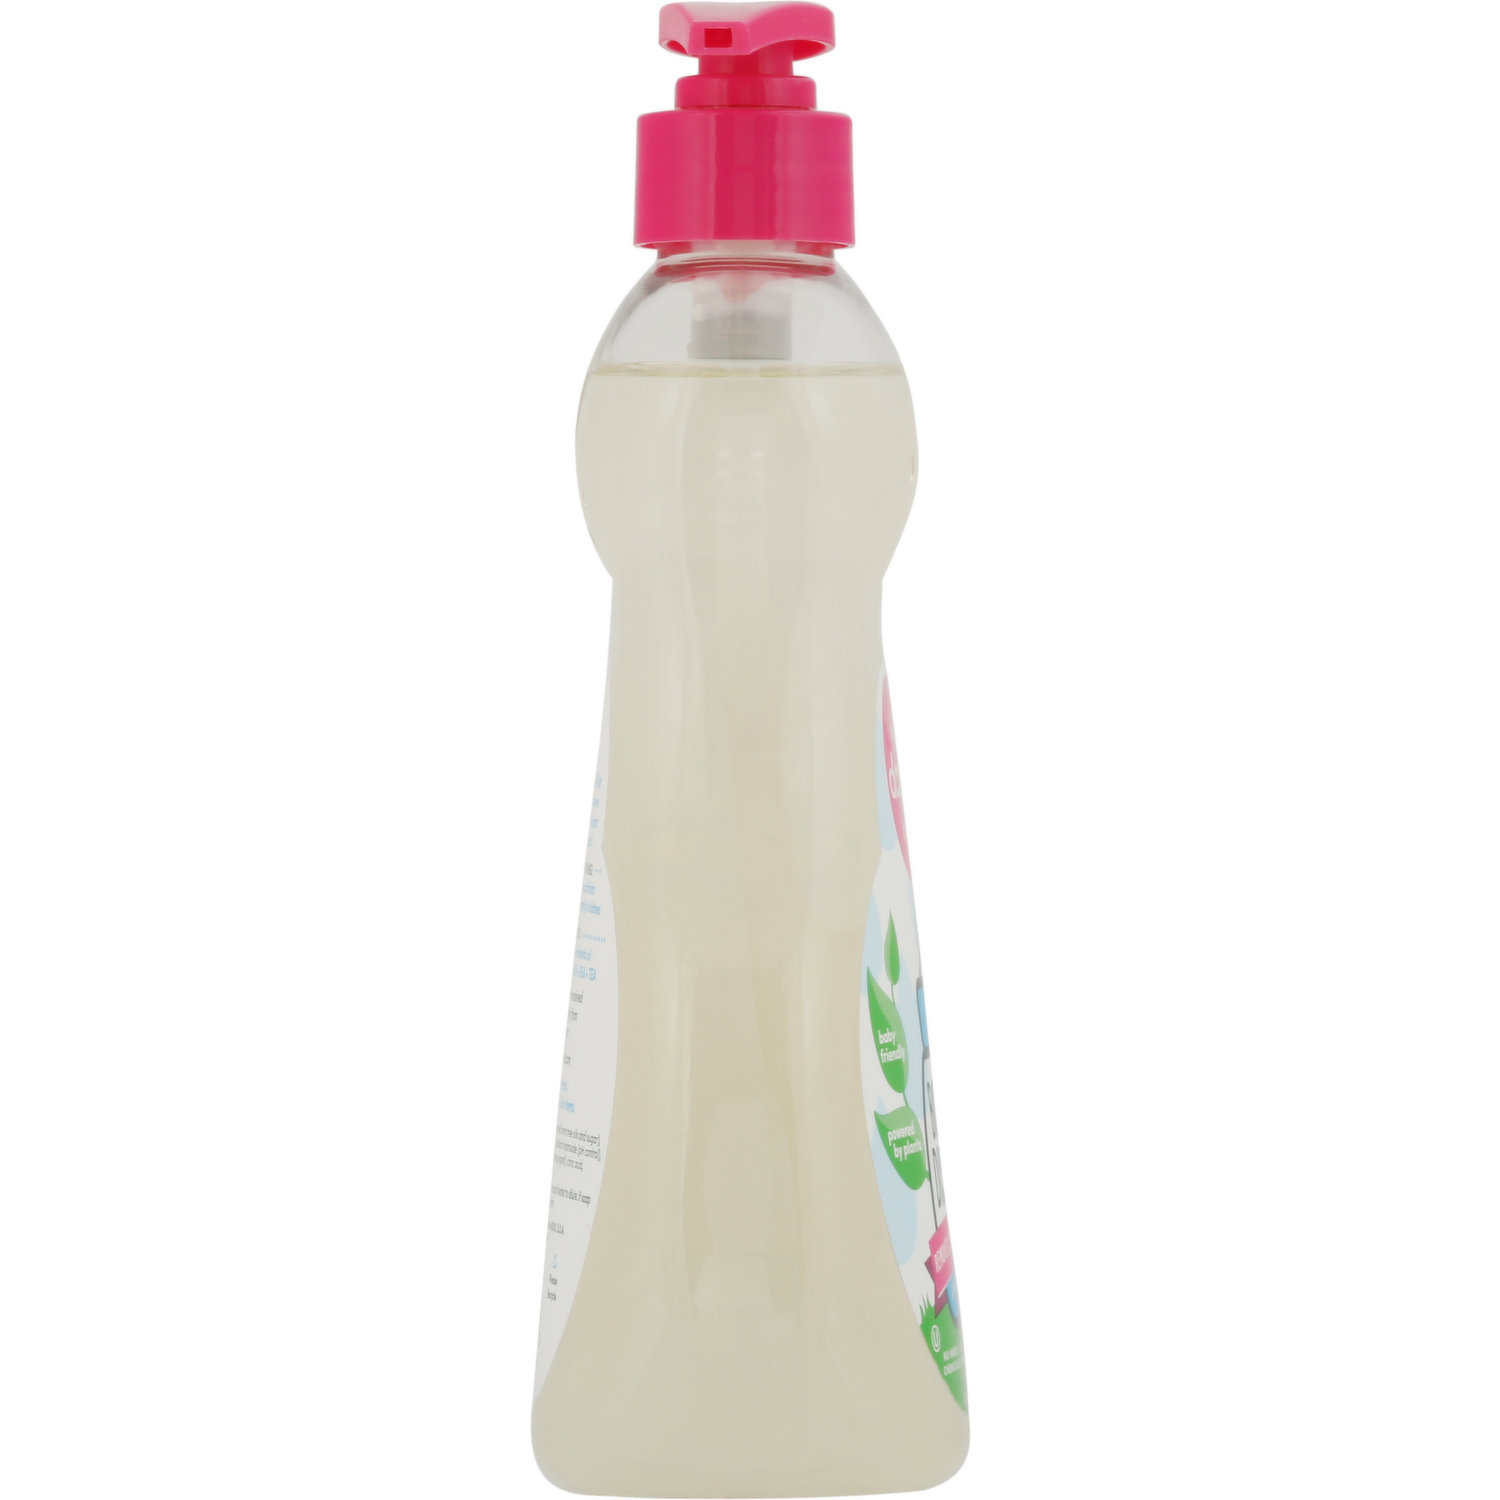 Dapple Baby Bottle & Dish Liquid 16.9 oz (Pack of 2)